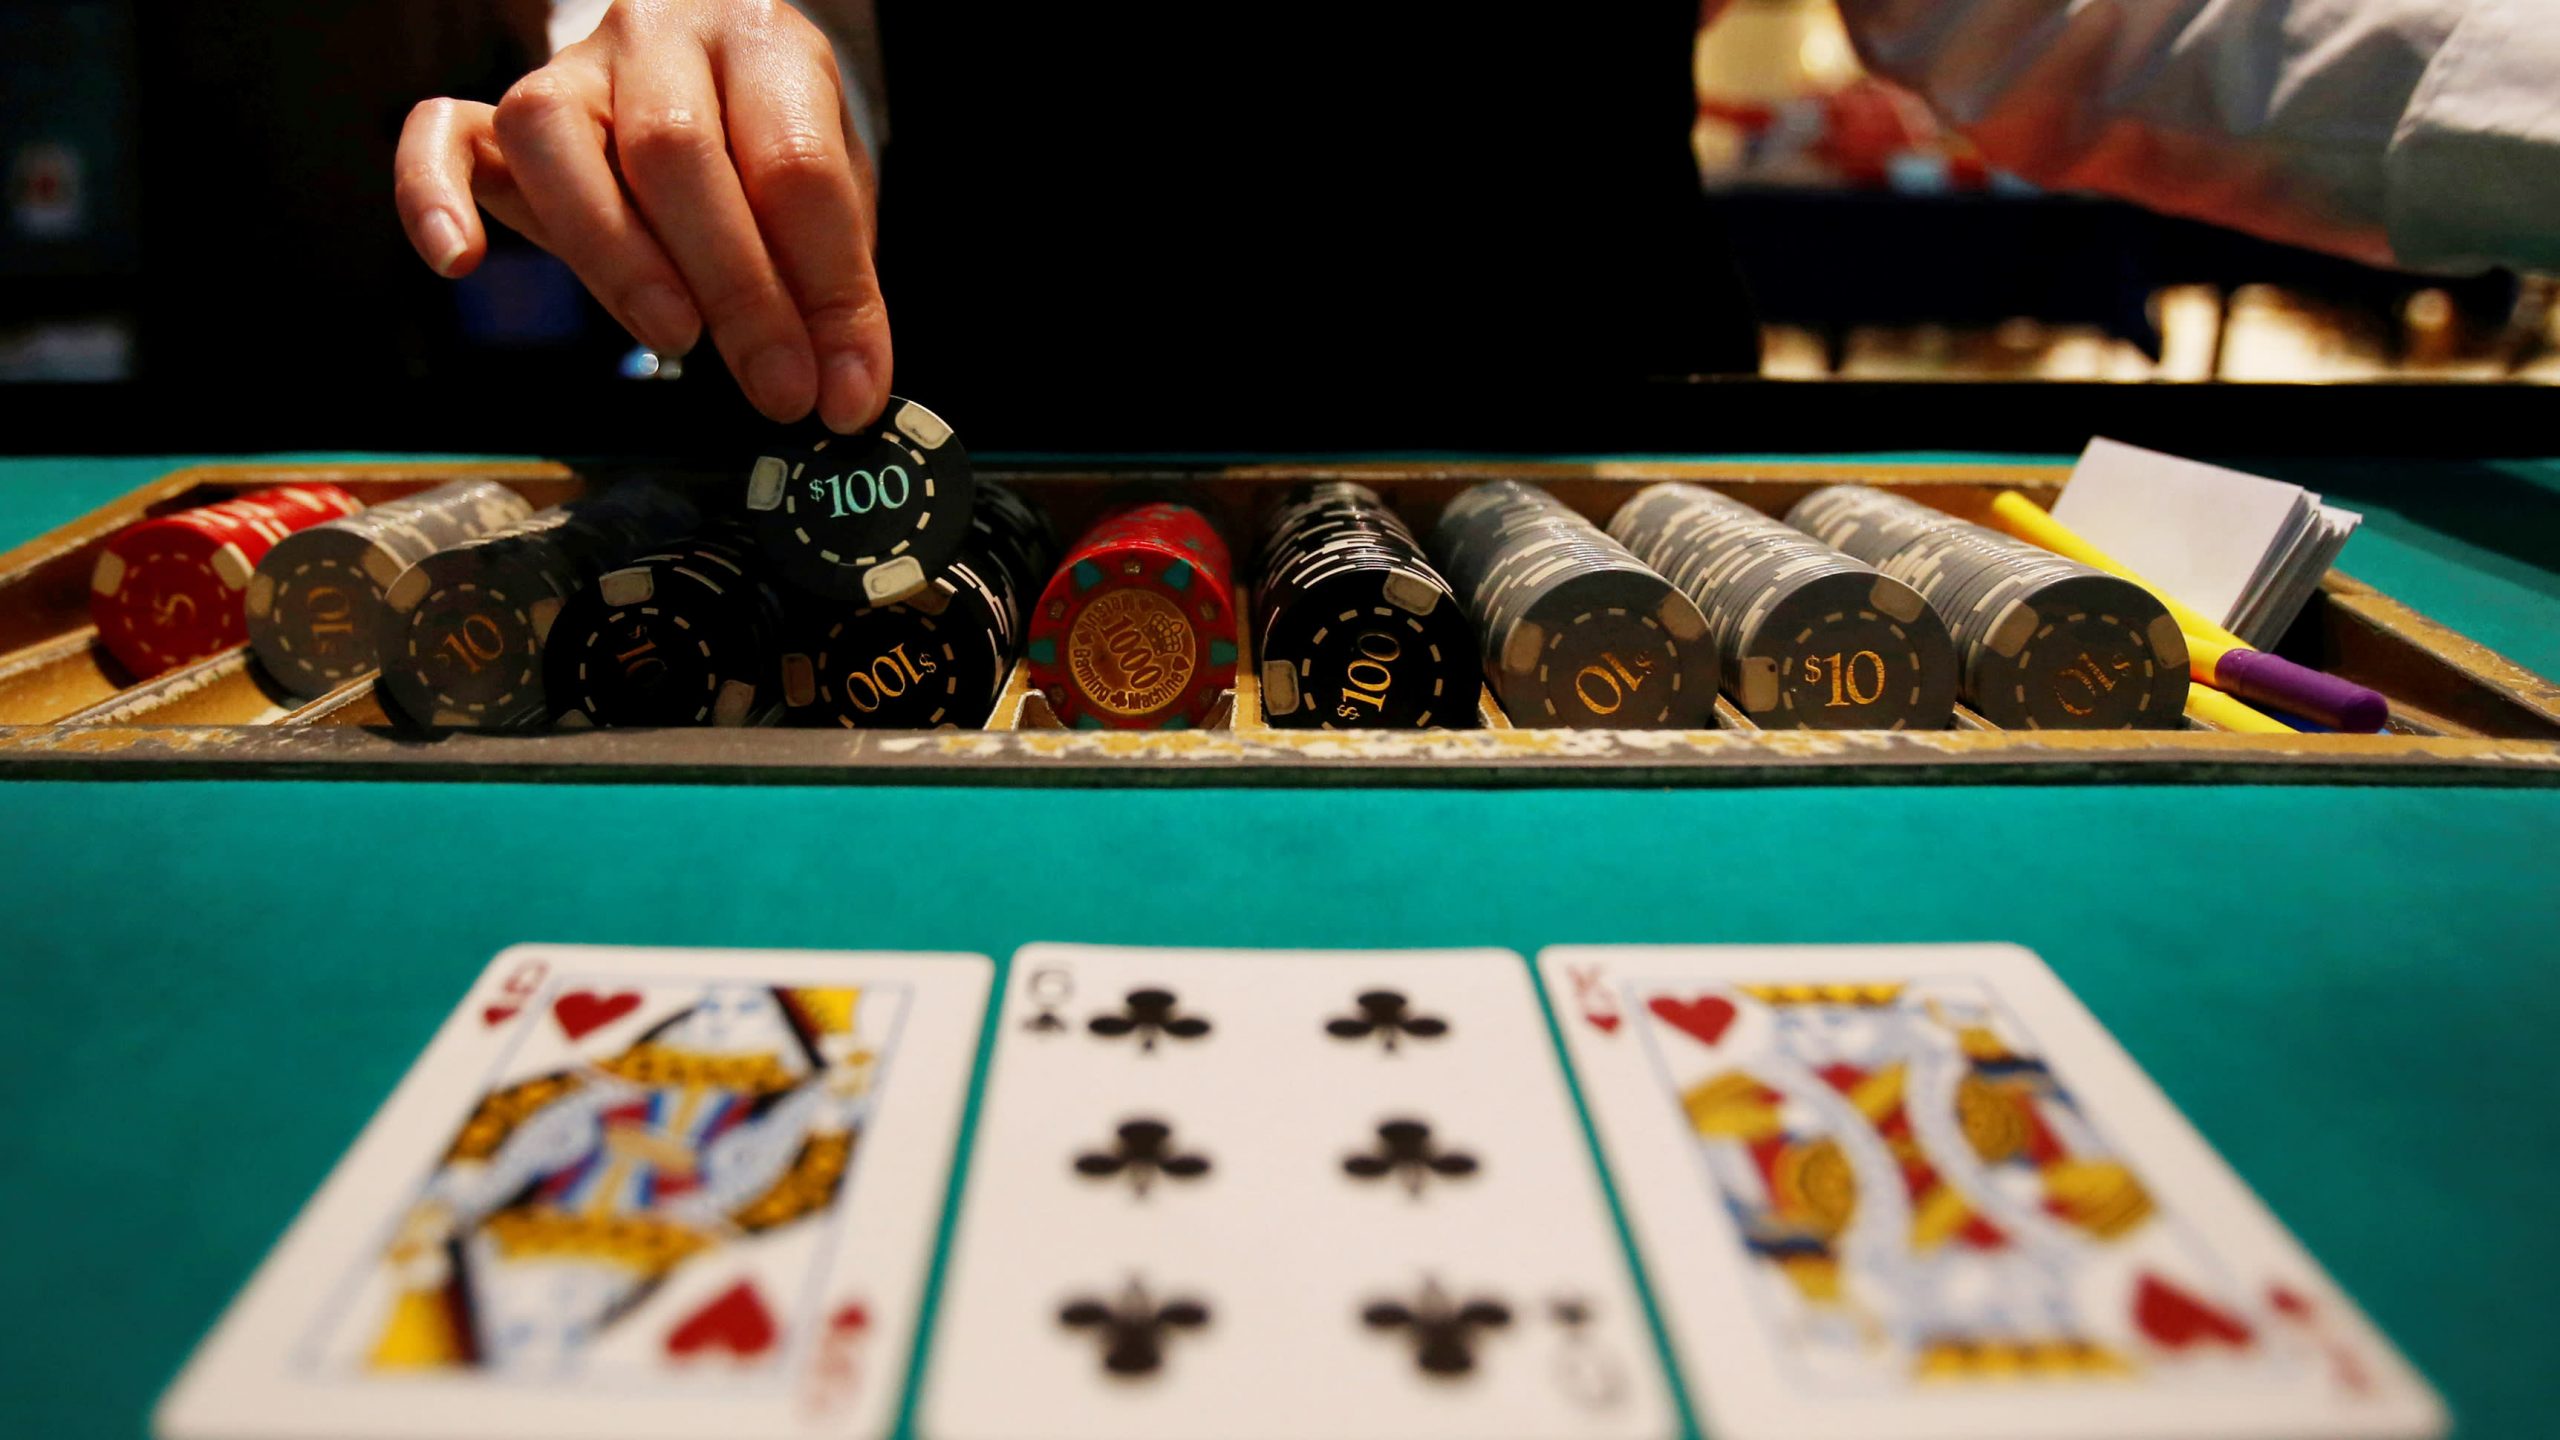 UK Enforces Credit Card Gambling Ban on April 14